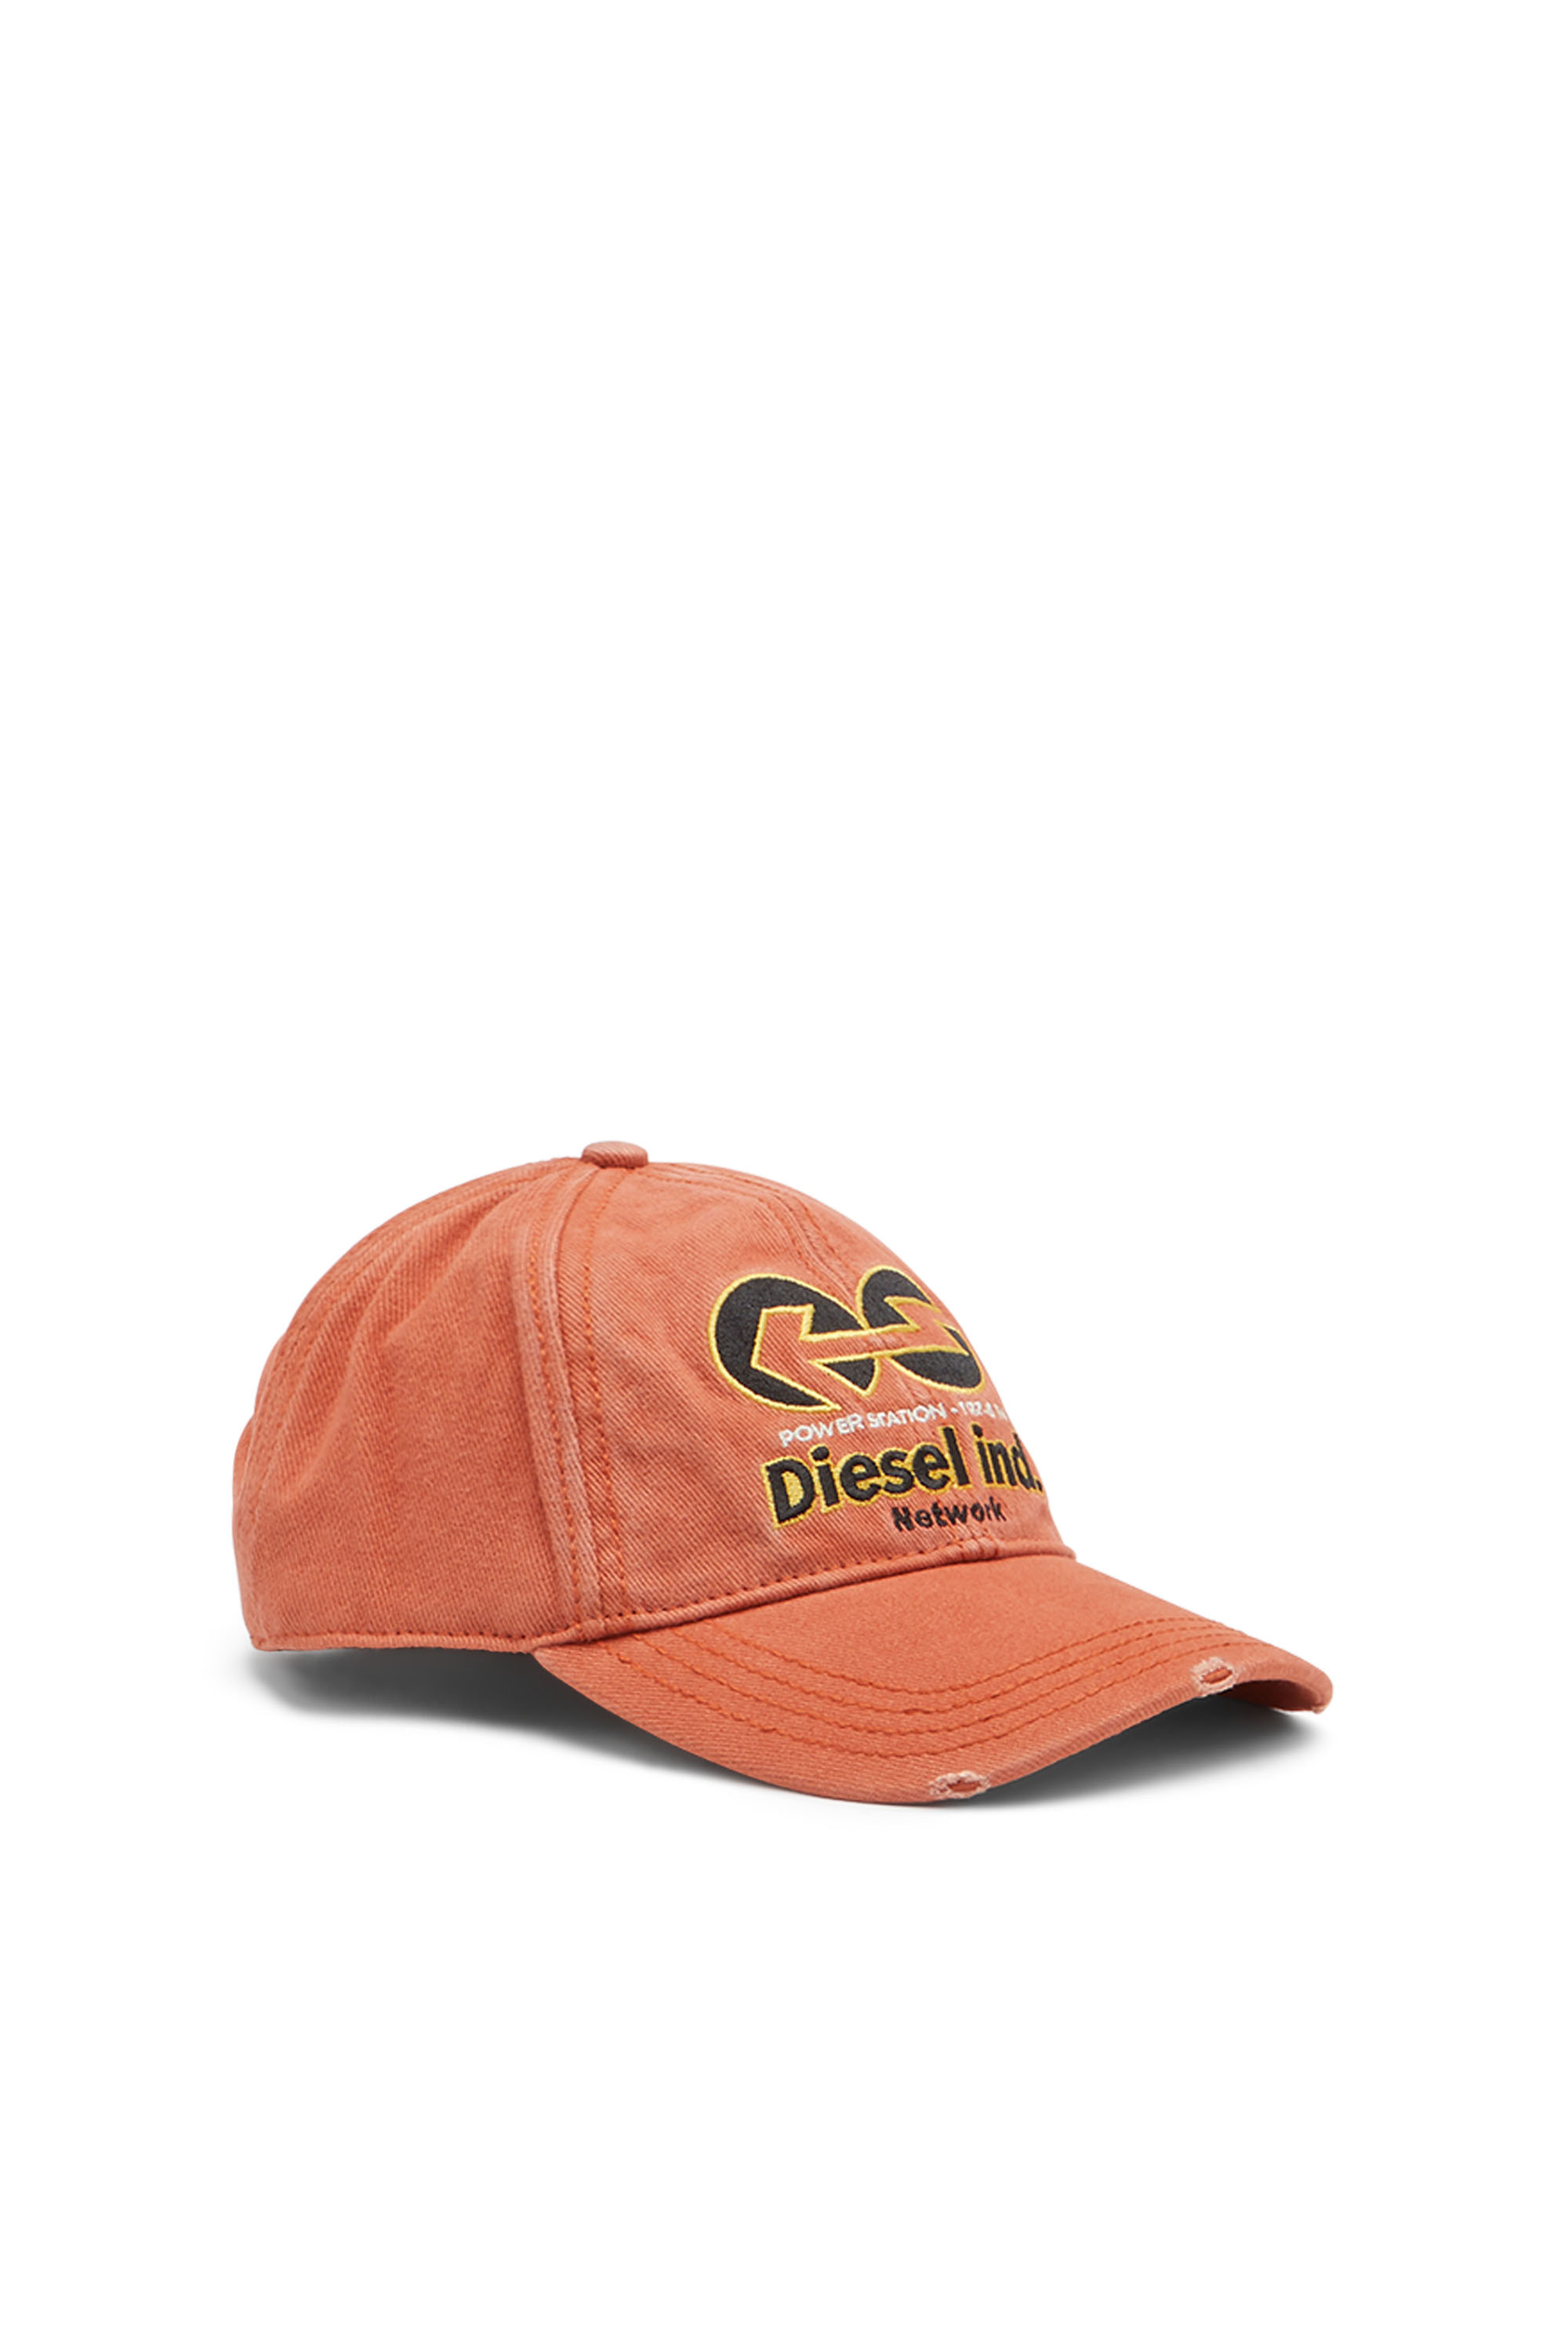 Diesel - Berretto da baseball in bull denim - Cappelli - Unisex - Arancione